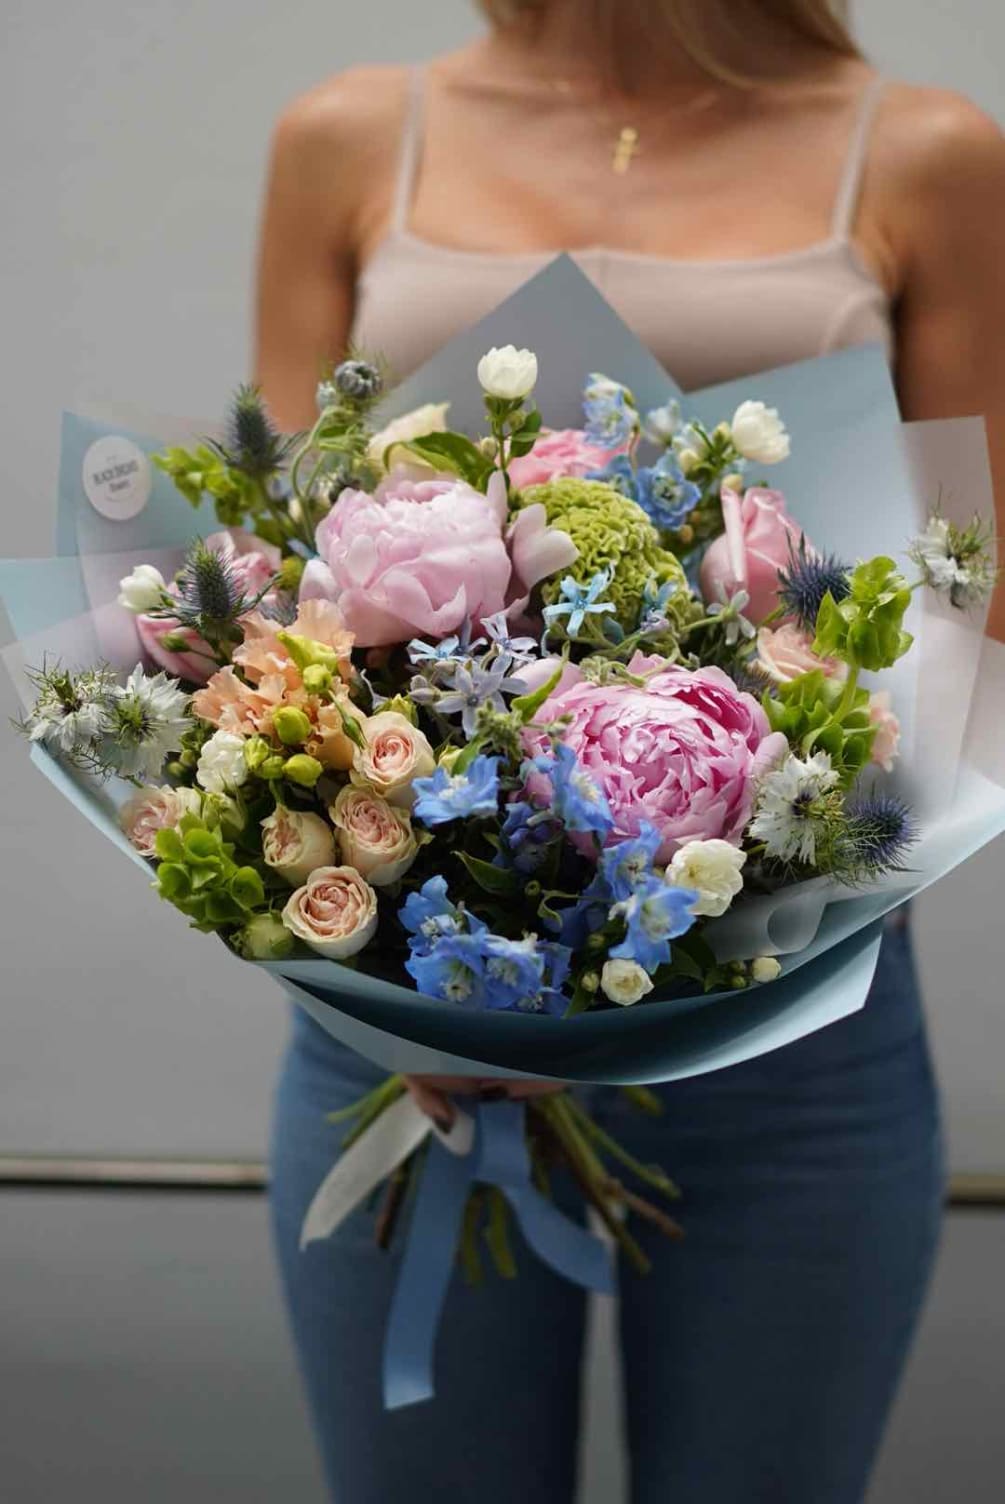 Blush peonies, pink garden roses, spray roses, blue tweedia, blue delphinium, blue